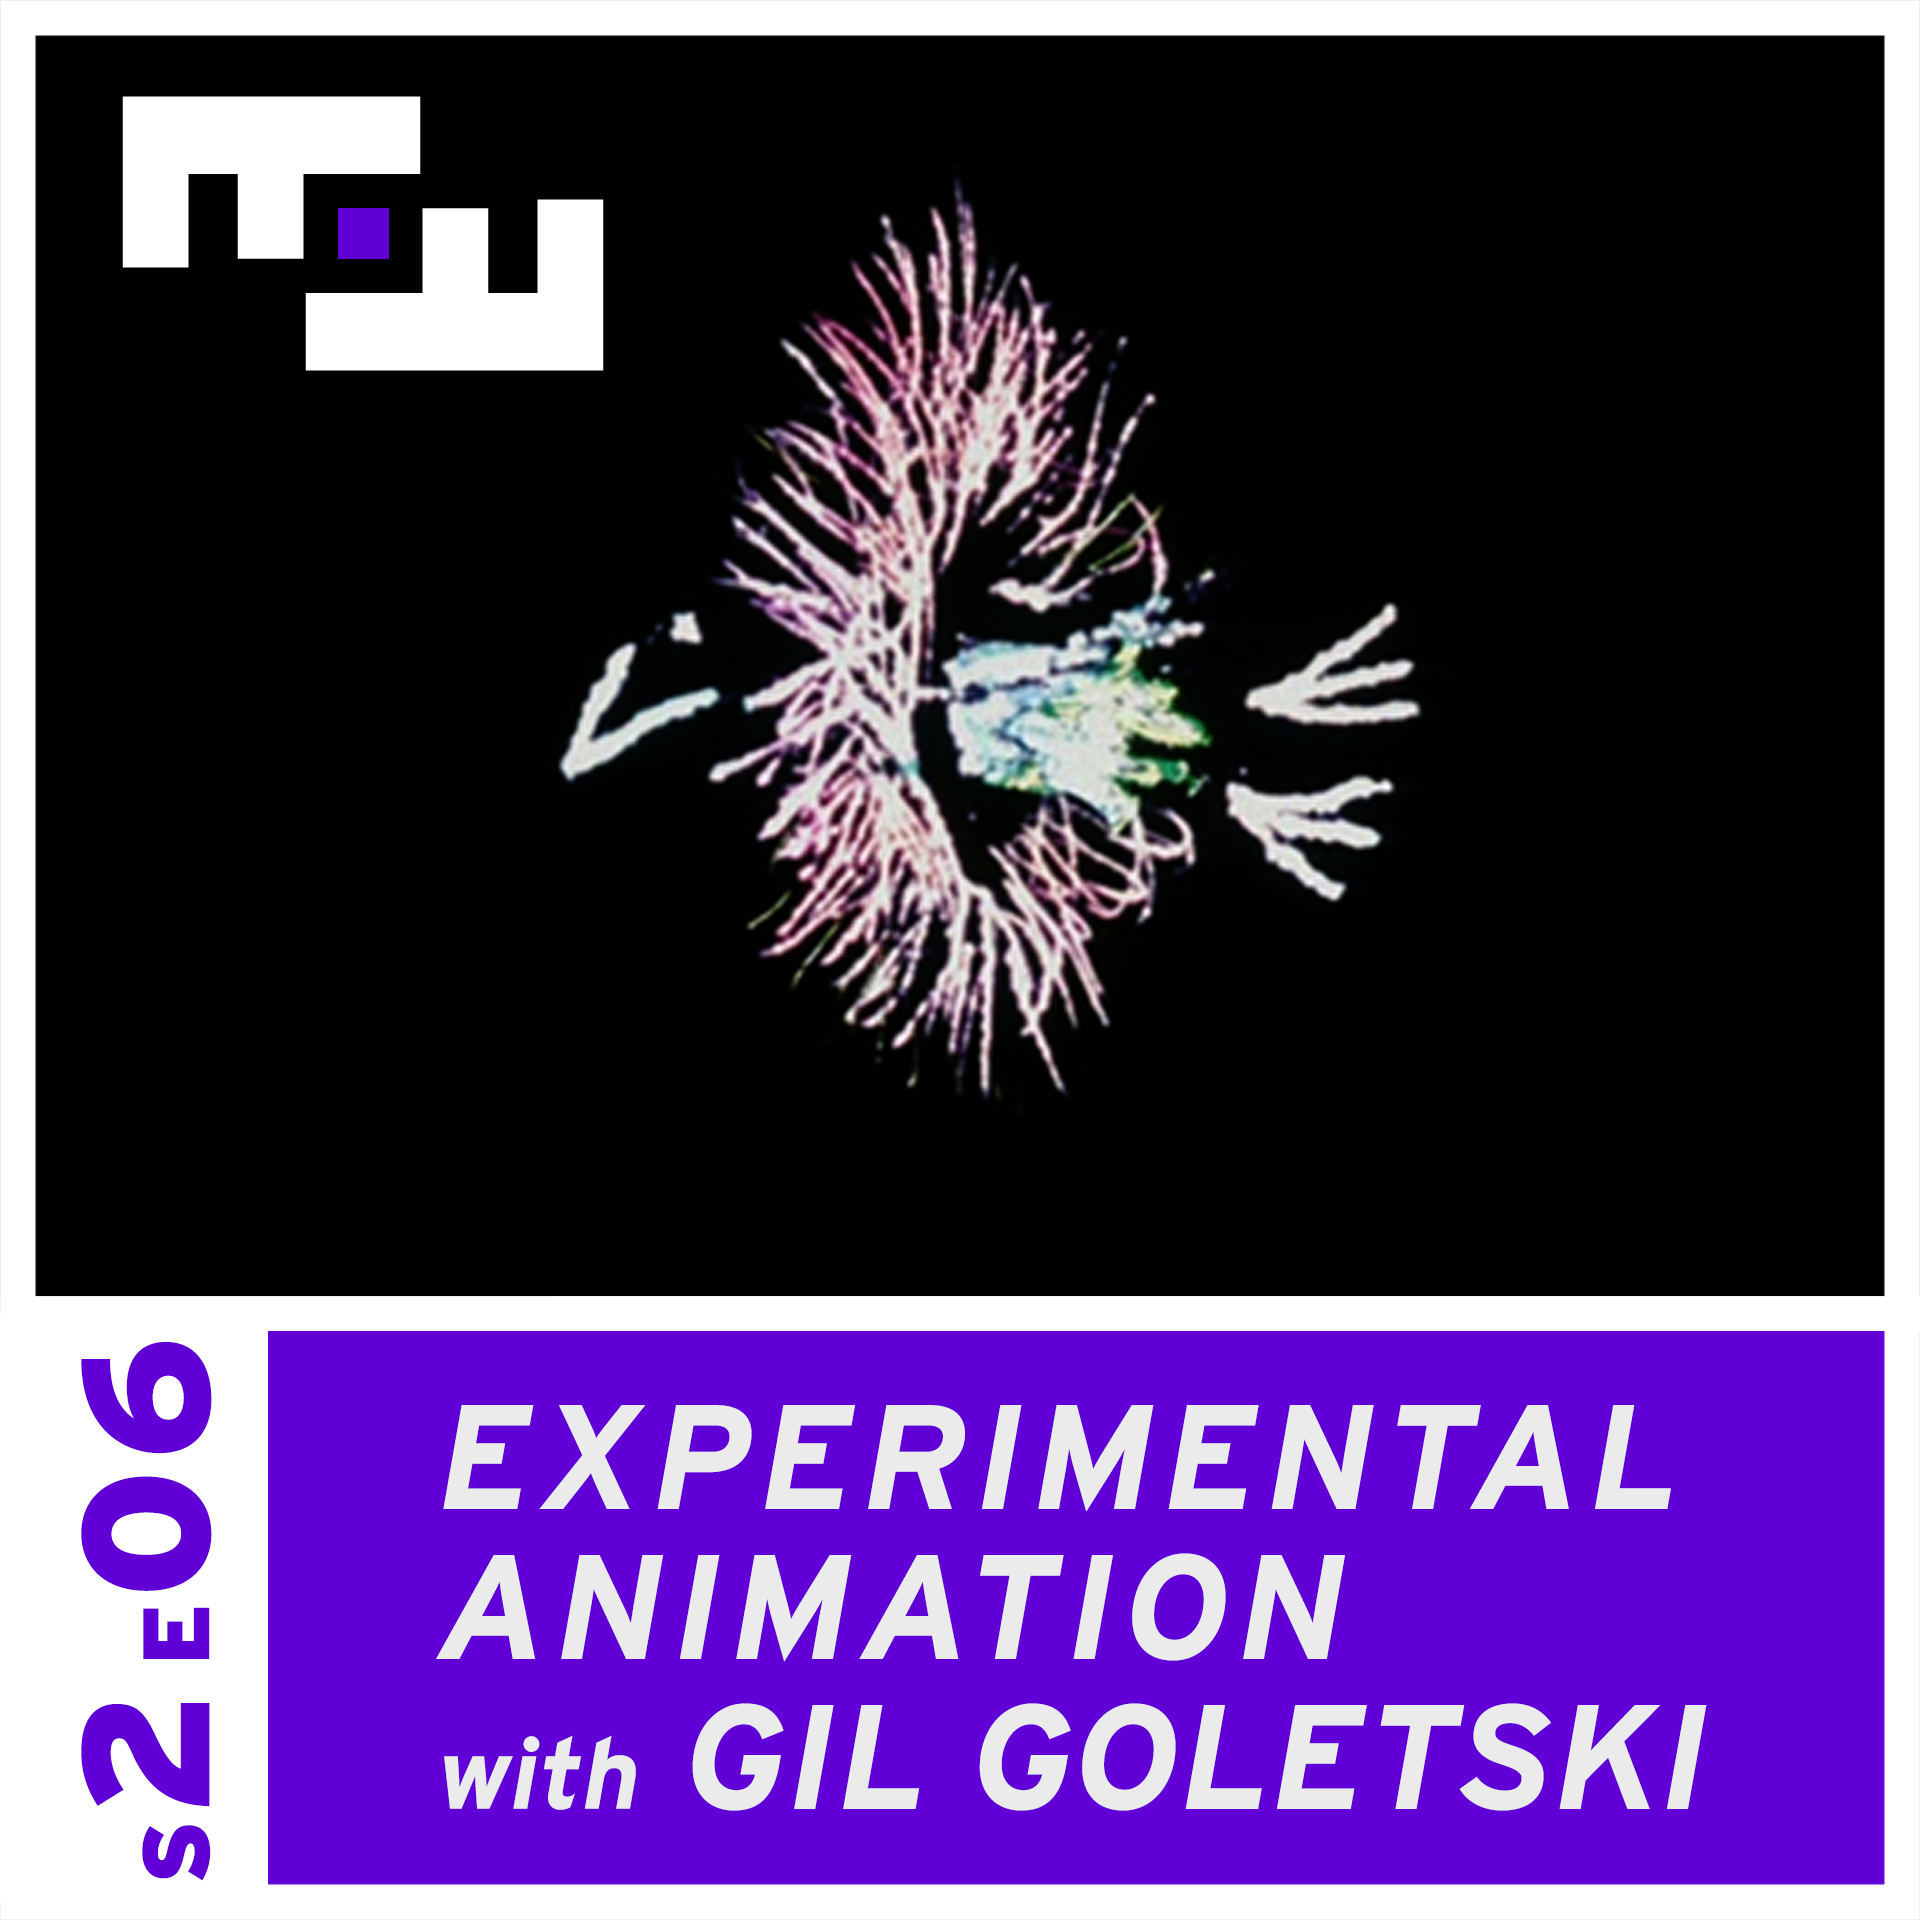 Experimental Animation/Gil Goletski